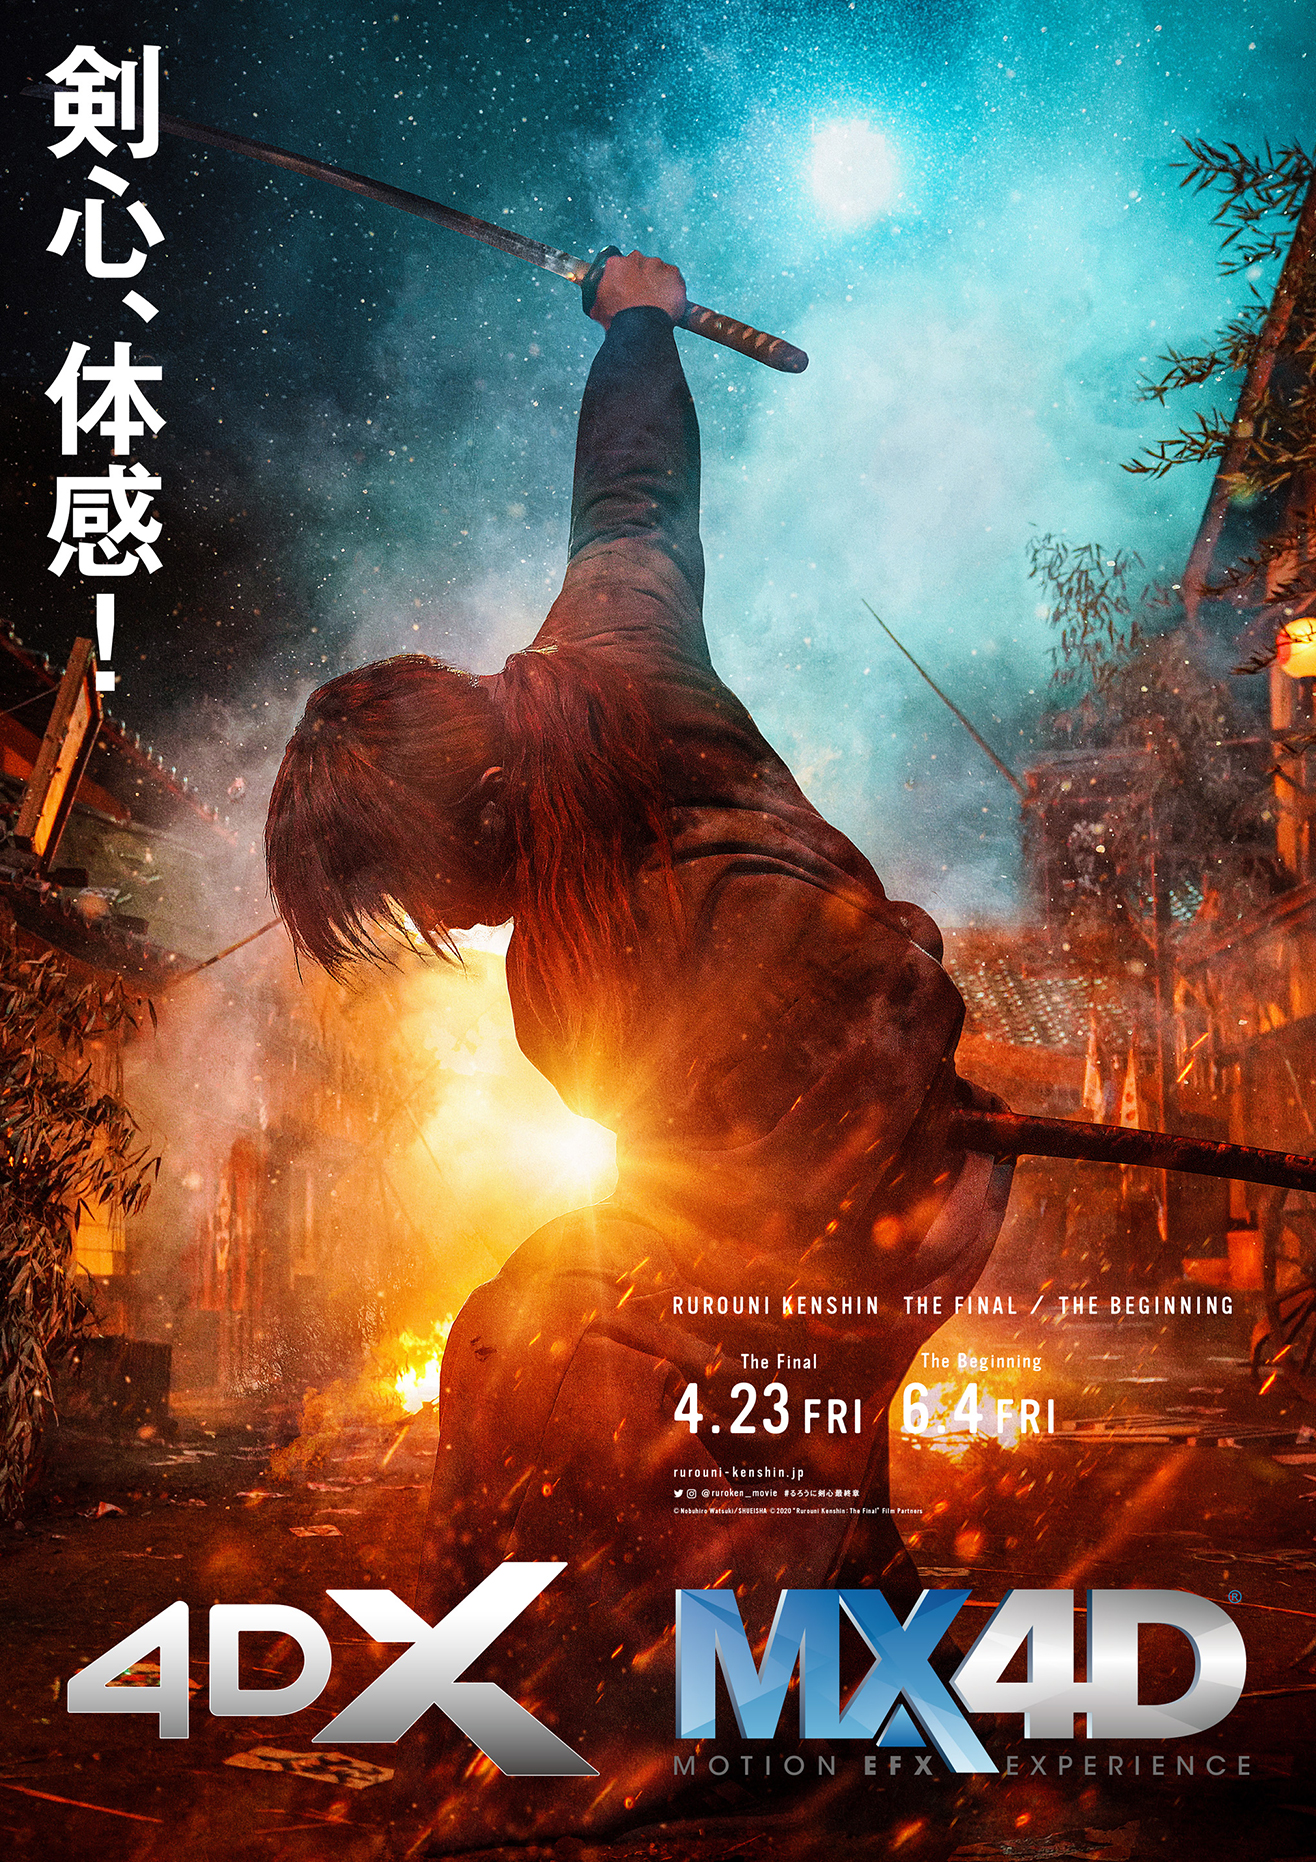 Rurouni-Kenshin-The-Final-Key-Visual